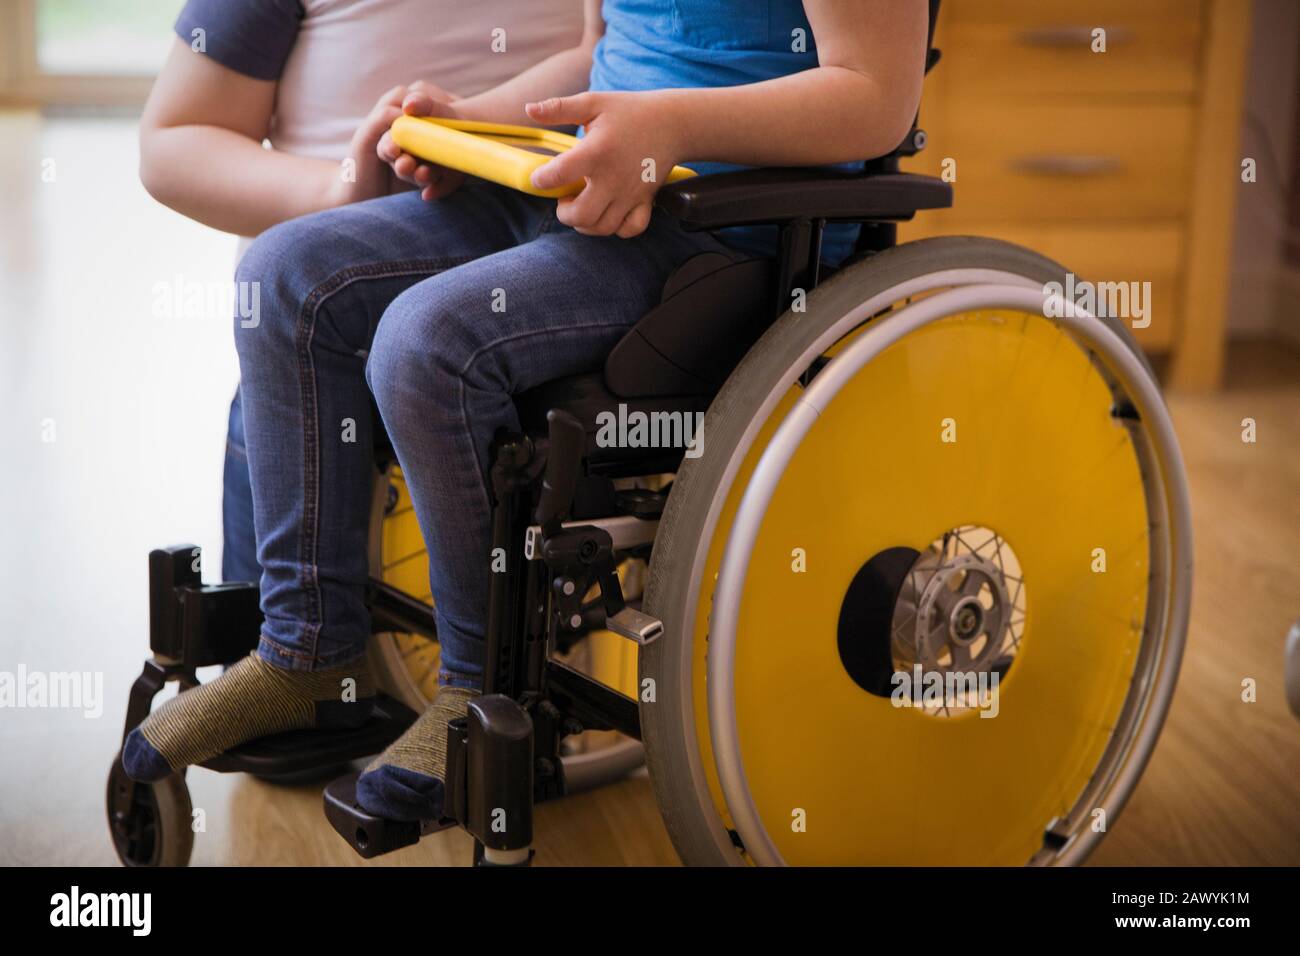 Boy in wheelchair using digital tablet Stock Photo